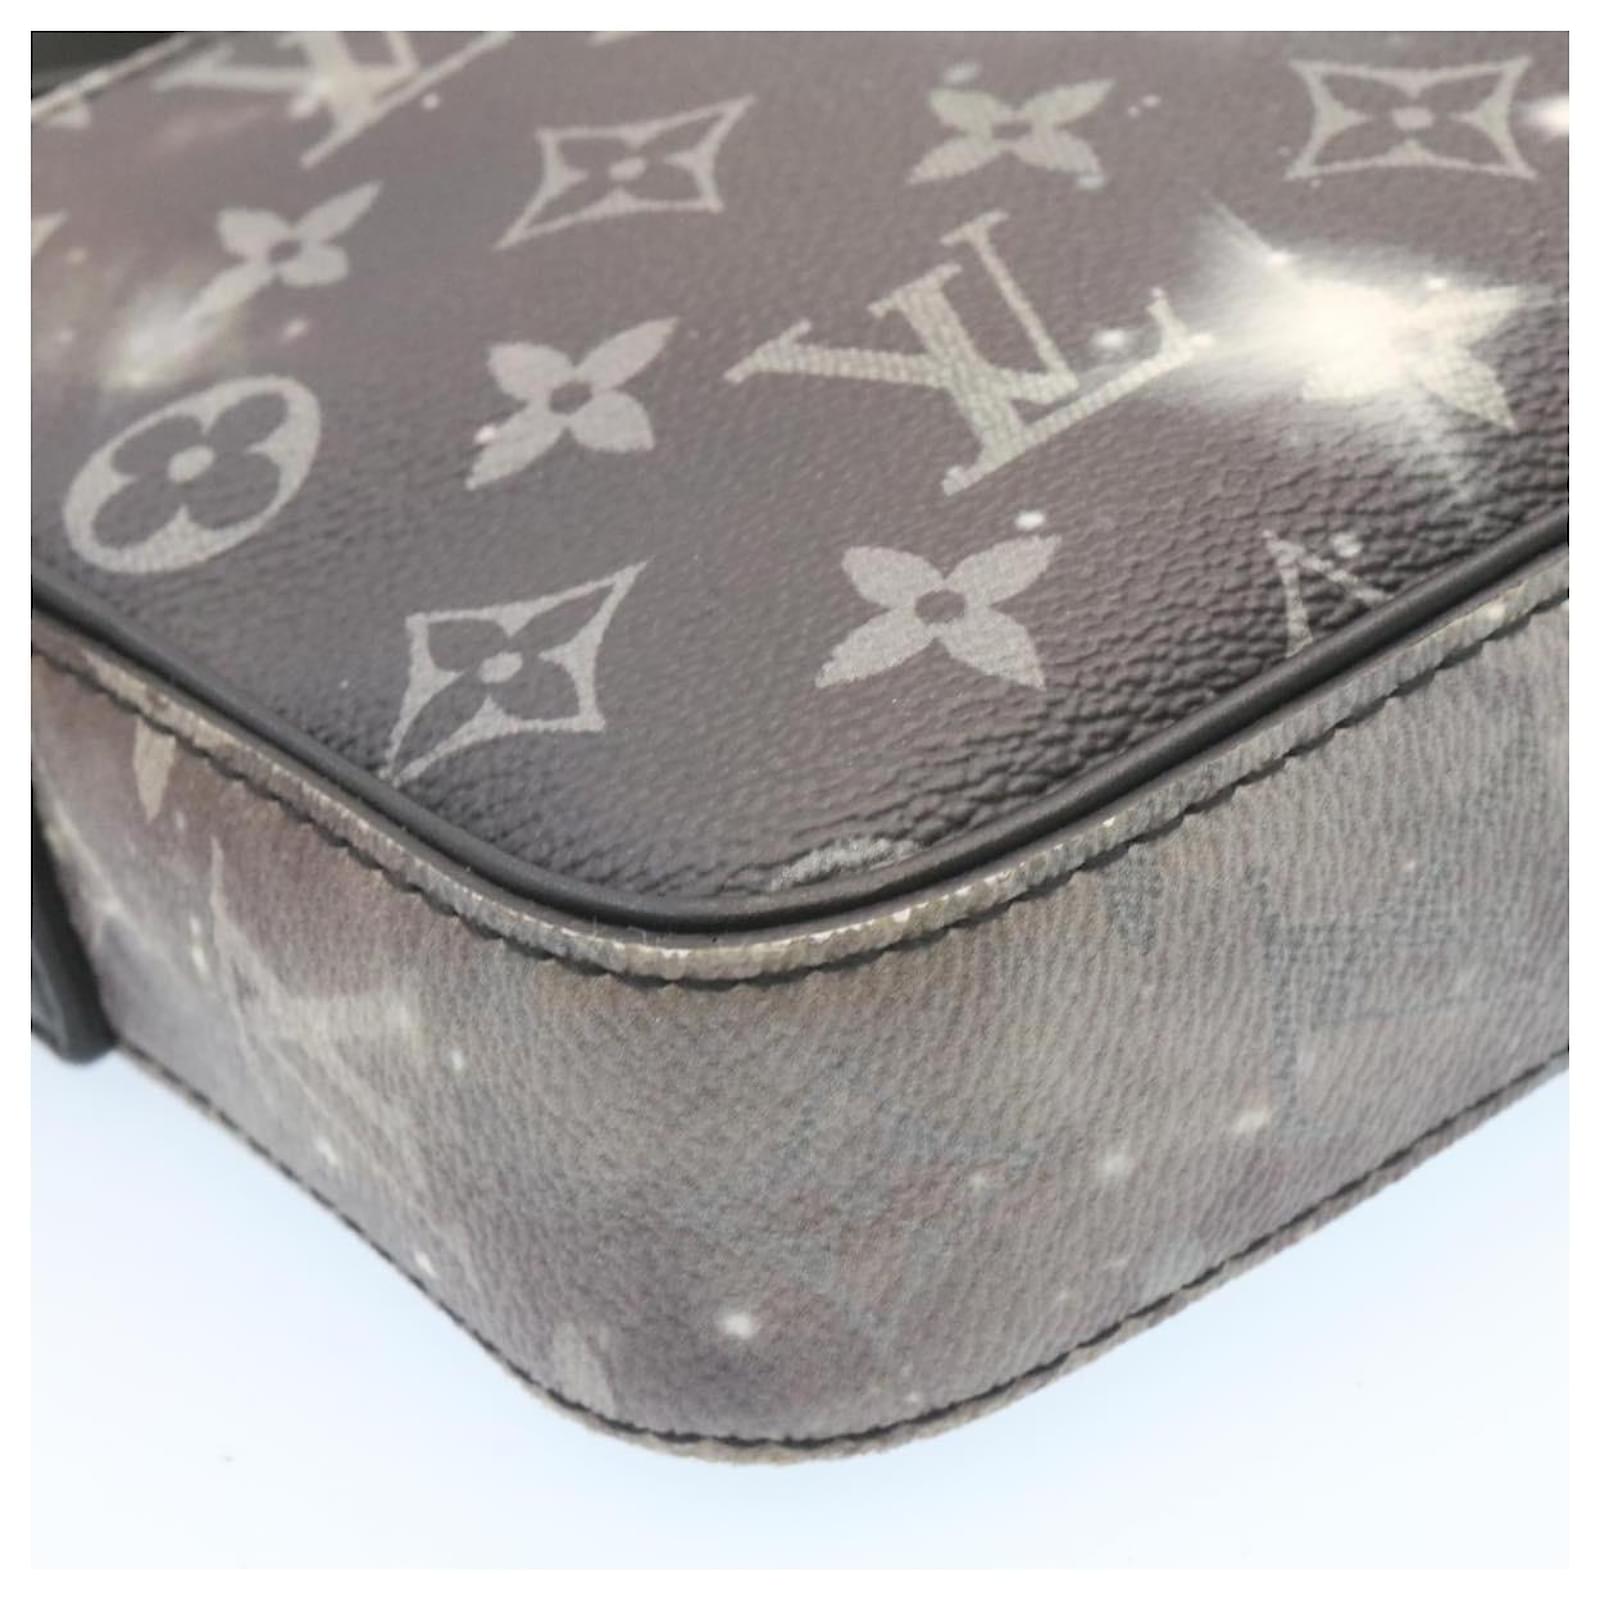 Louis Vuitton Alpha Messenger Bag Limited Edition Monogram Galaxy Canvas  Gray 22242815